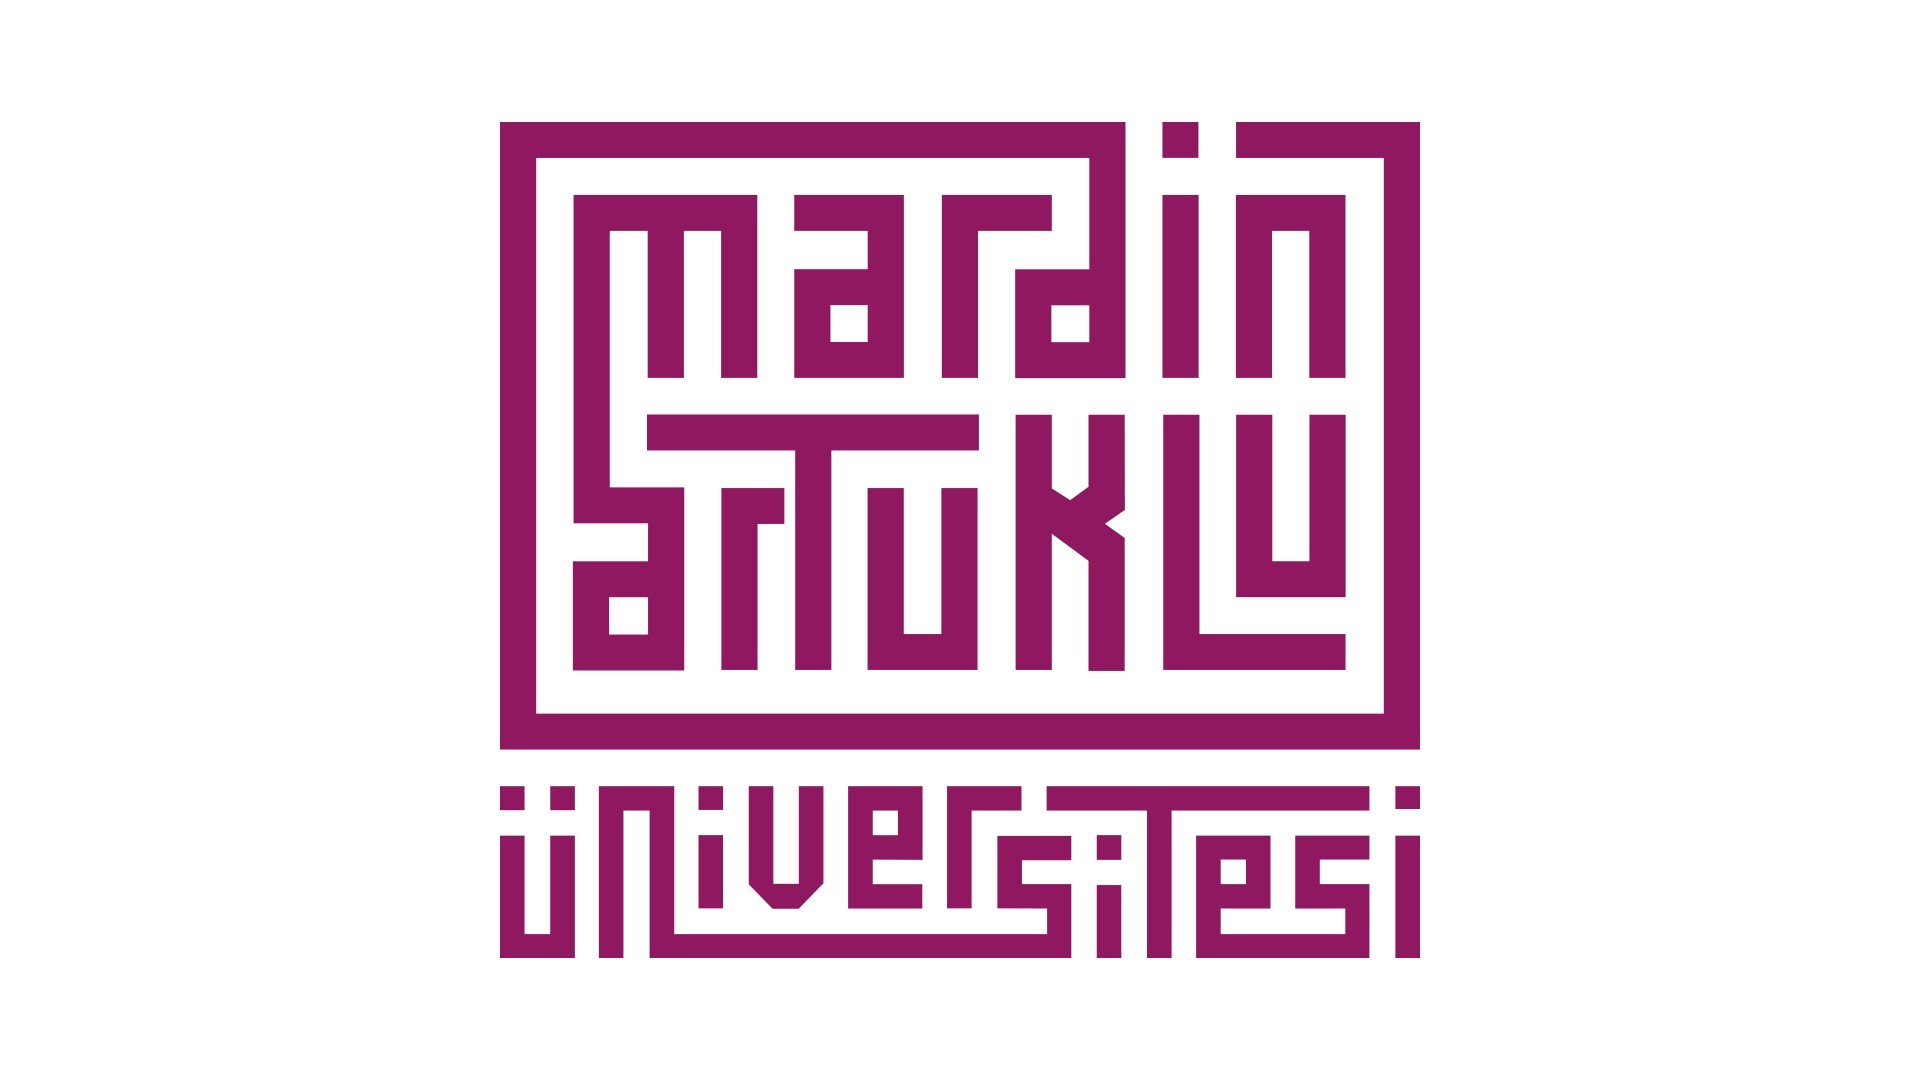 Mardin Artuklu University (Turkey) joins the University Network on Cultural Routes Studies